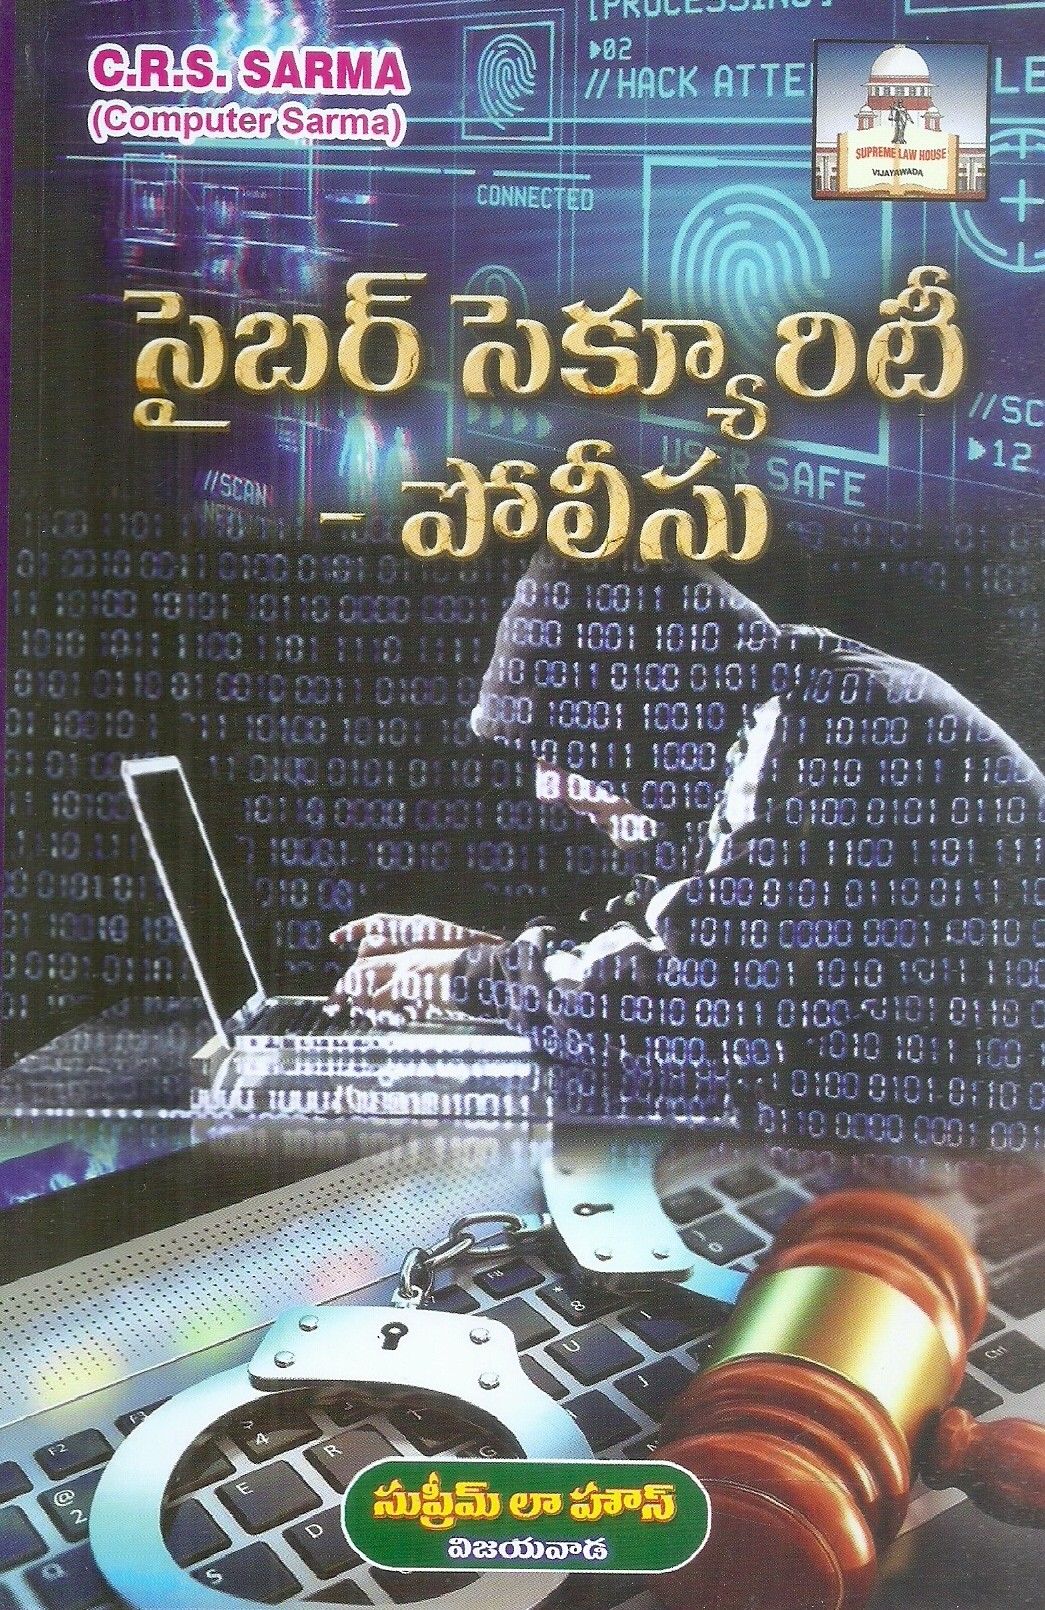 cyber-security-law-police-c-r-s-sarma